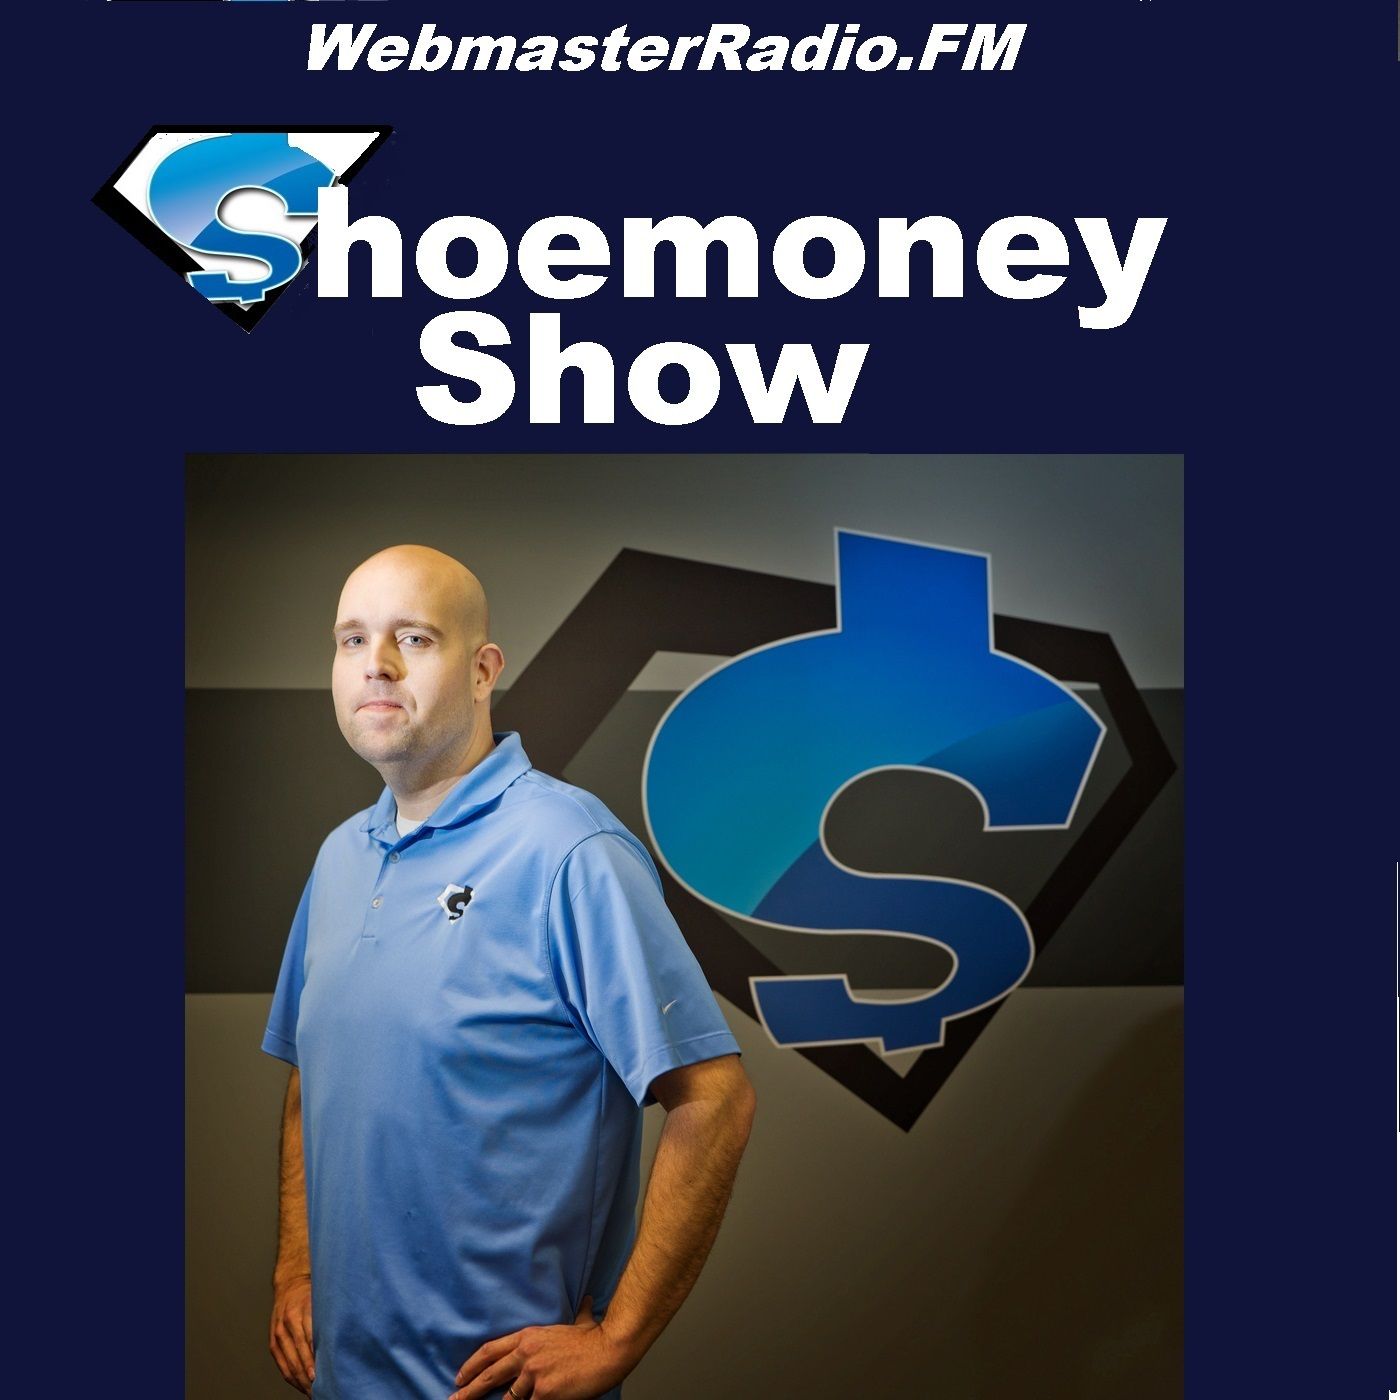 Shoemoney Show